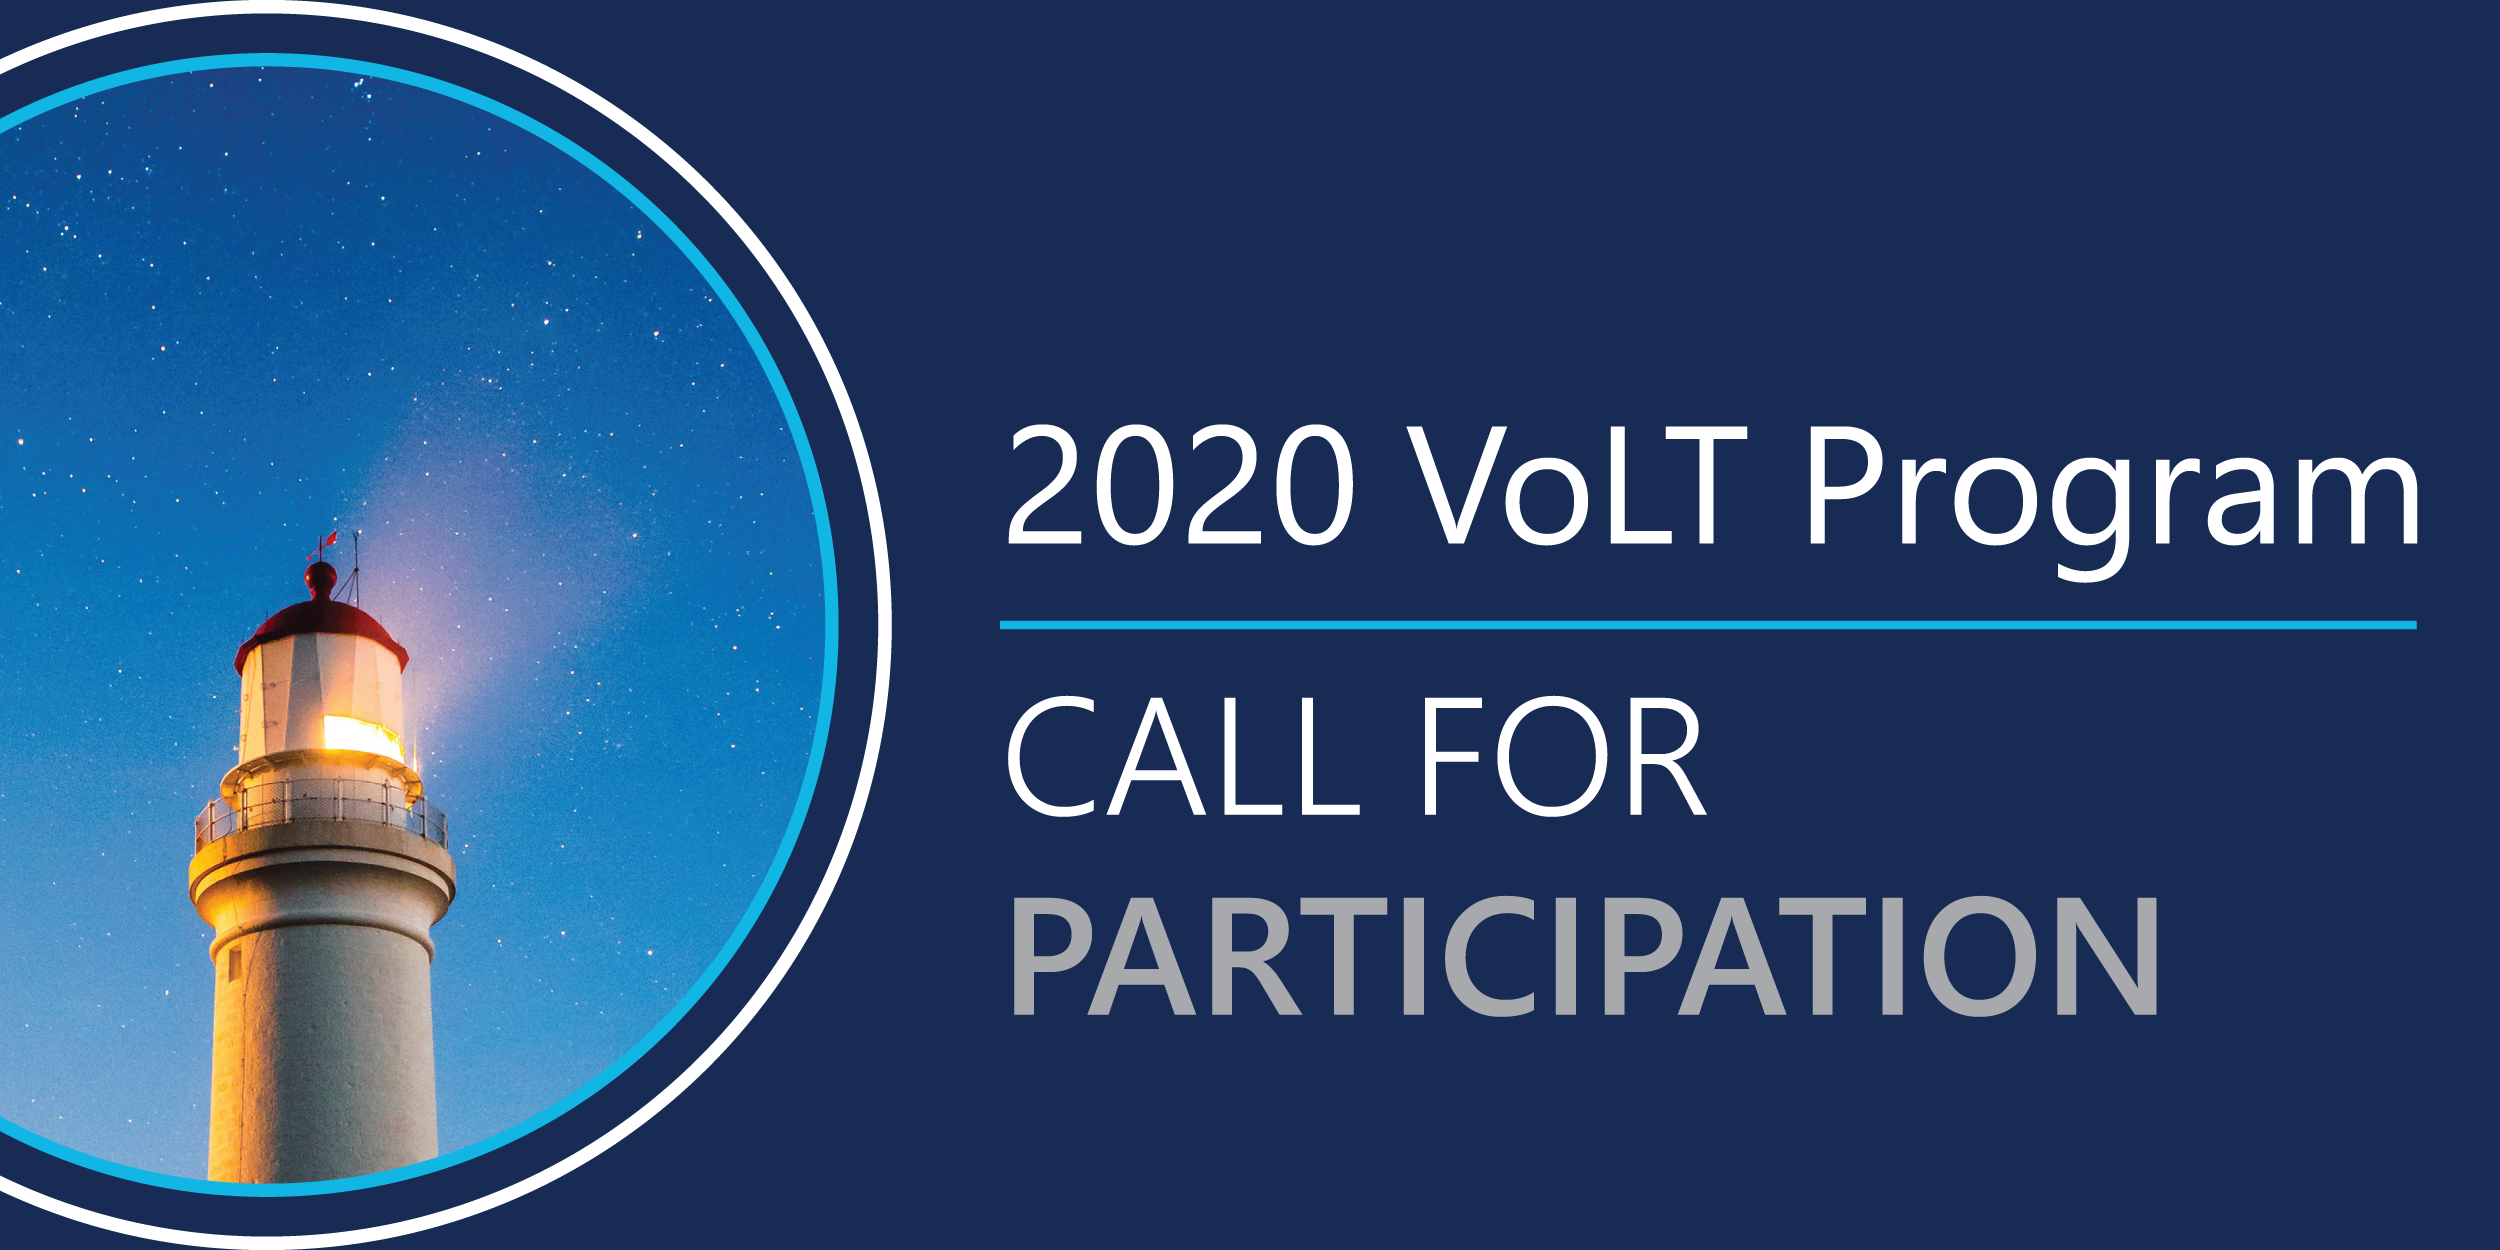 2020 VoLT Program Call for Participation